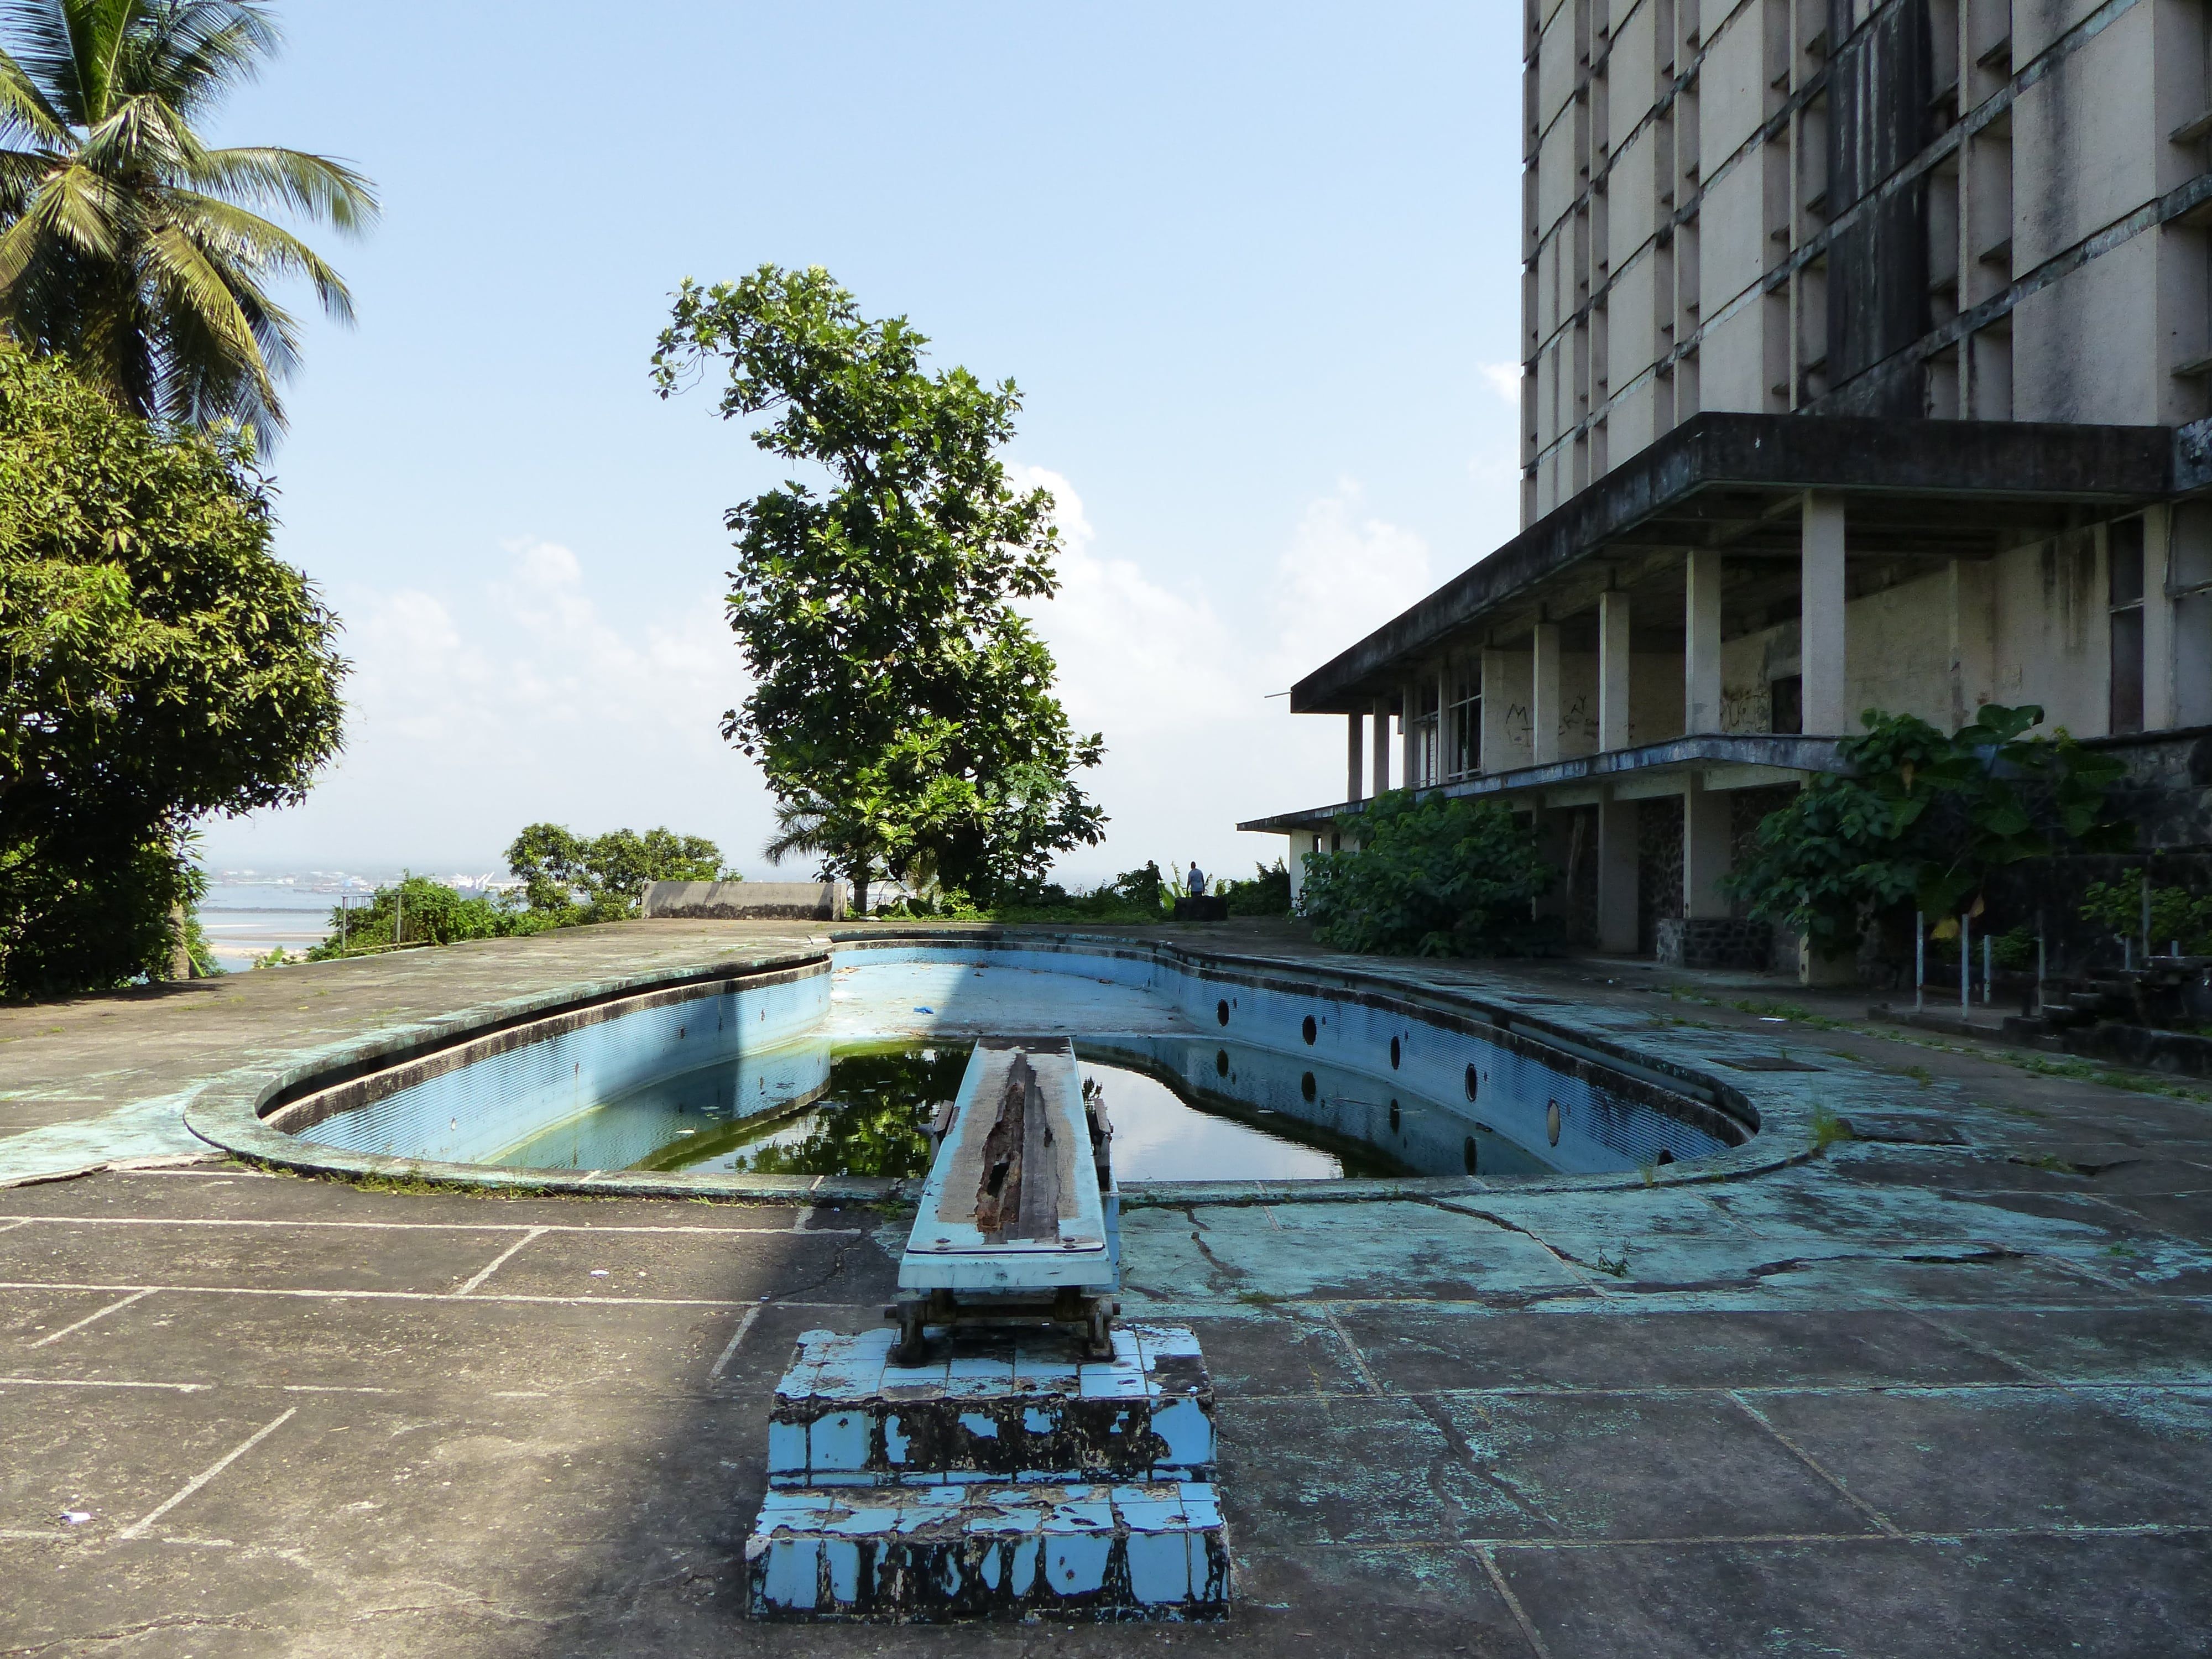 Ducor Hotel pool